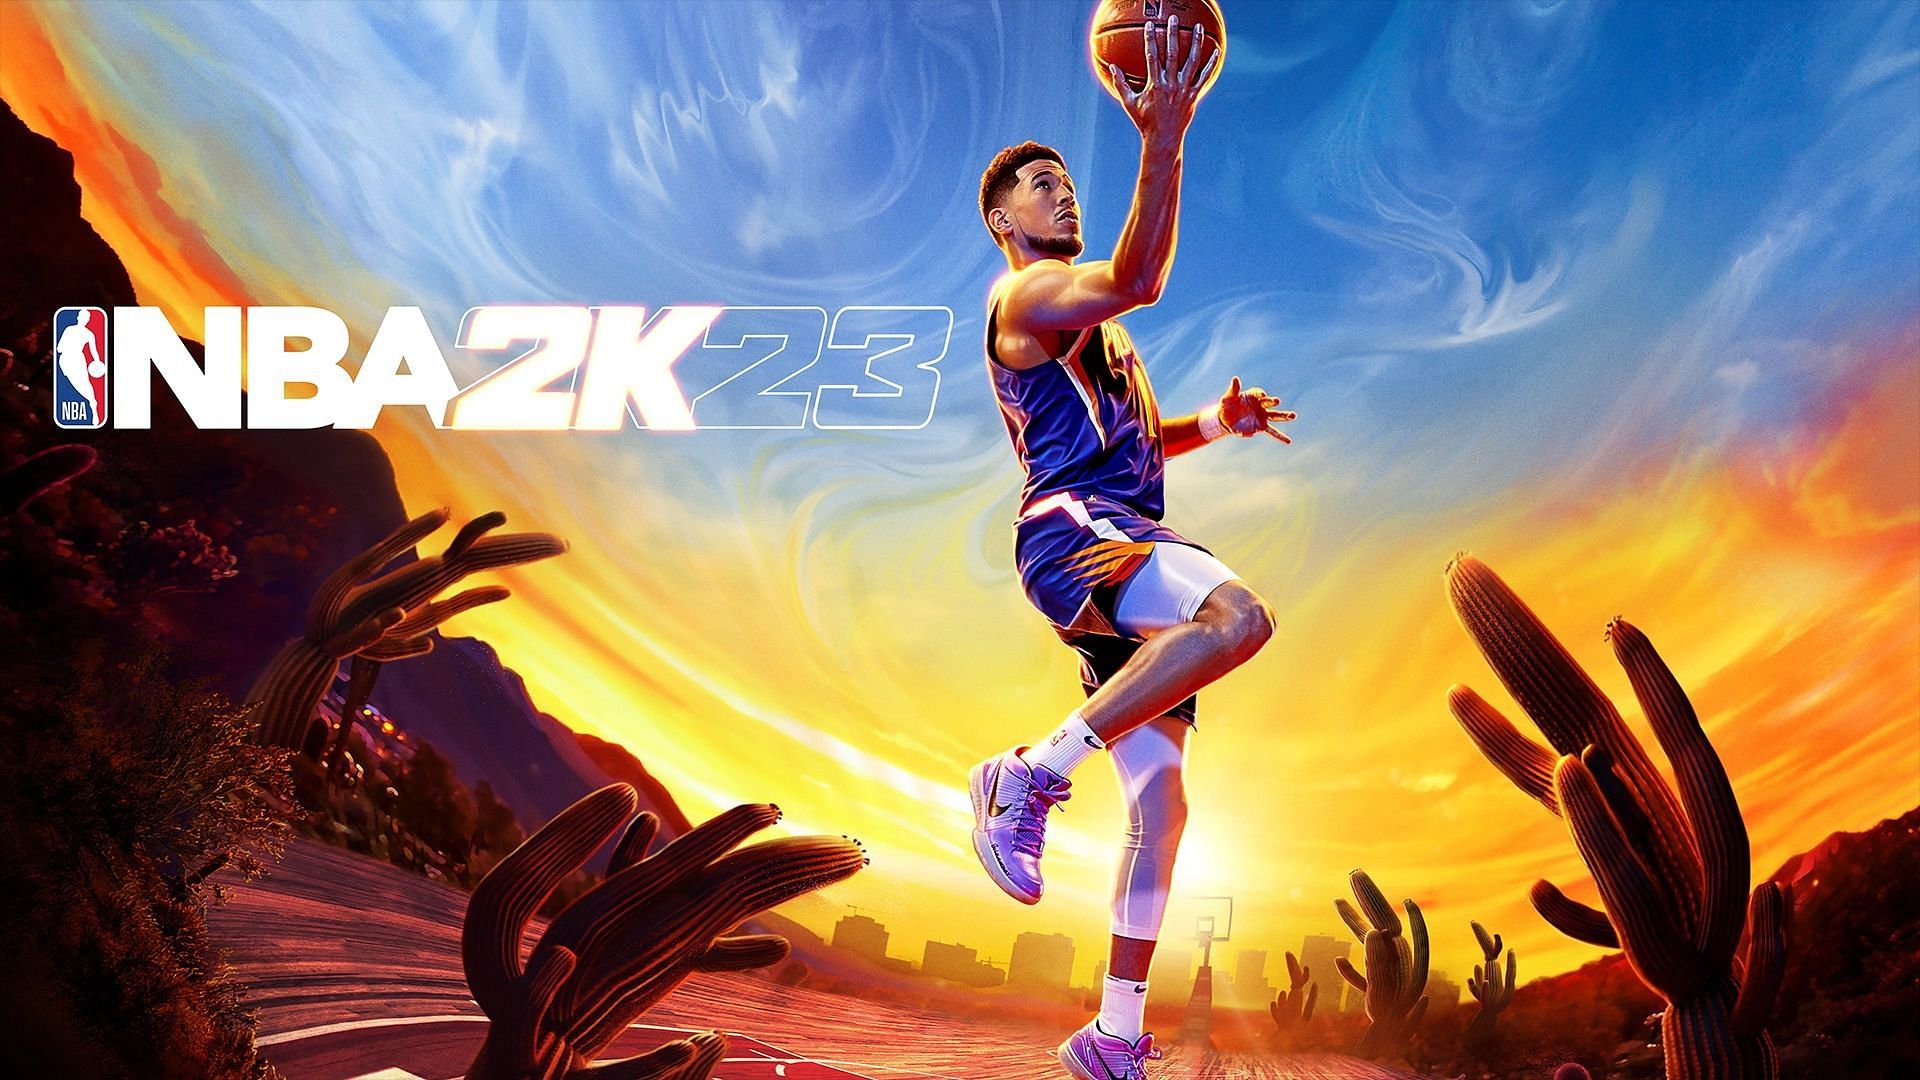 NBA 2K23 Championship Edition - NBA League Pass Code Issues?